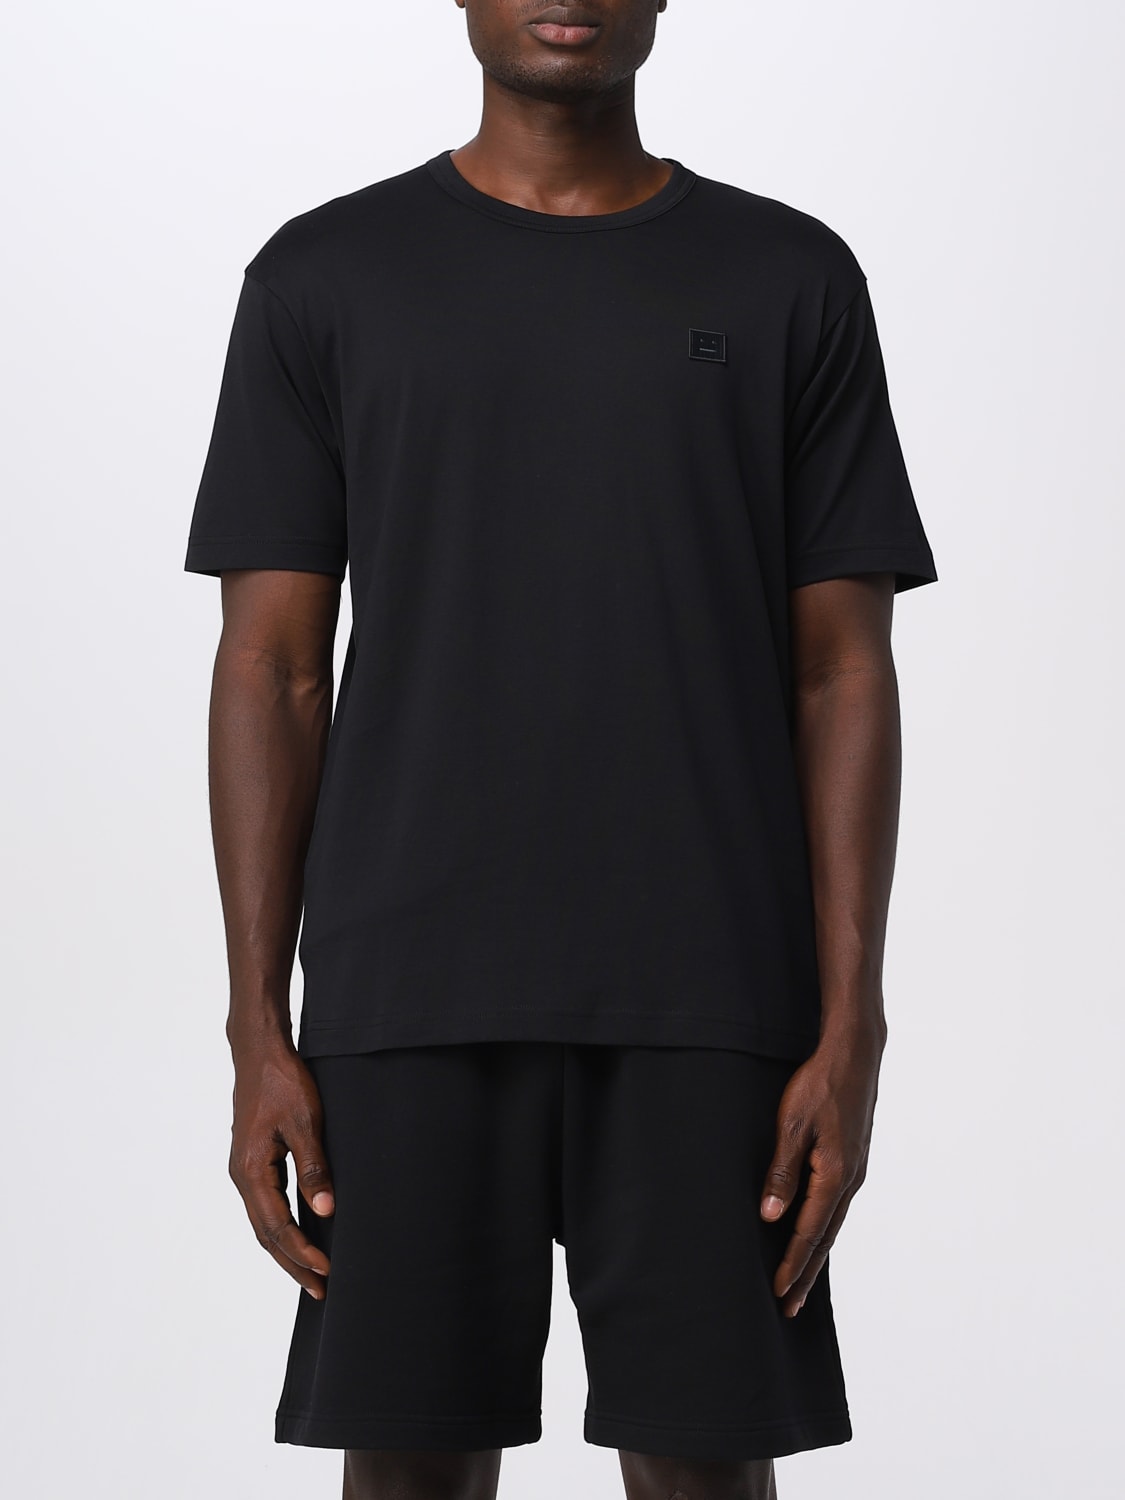 ACNE STUDIOS: t-shirt for man - Black | Acne Studios t-shirt CL0205 ...